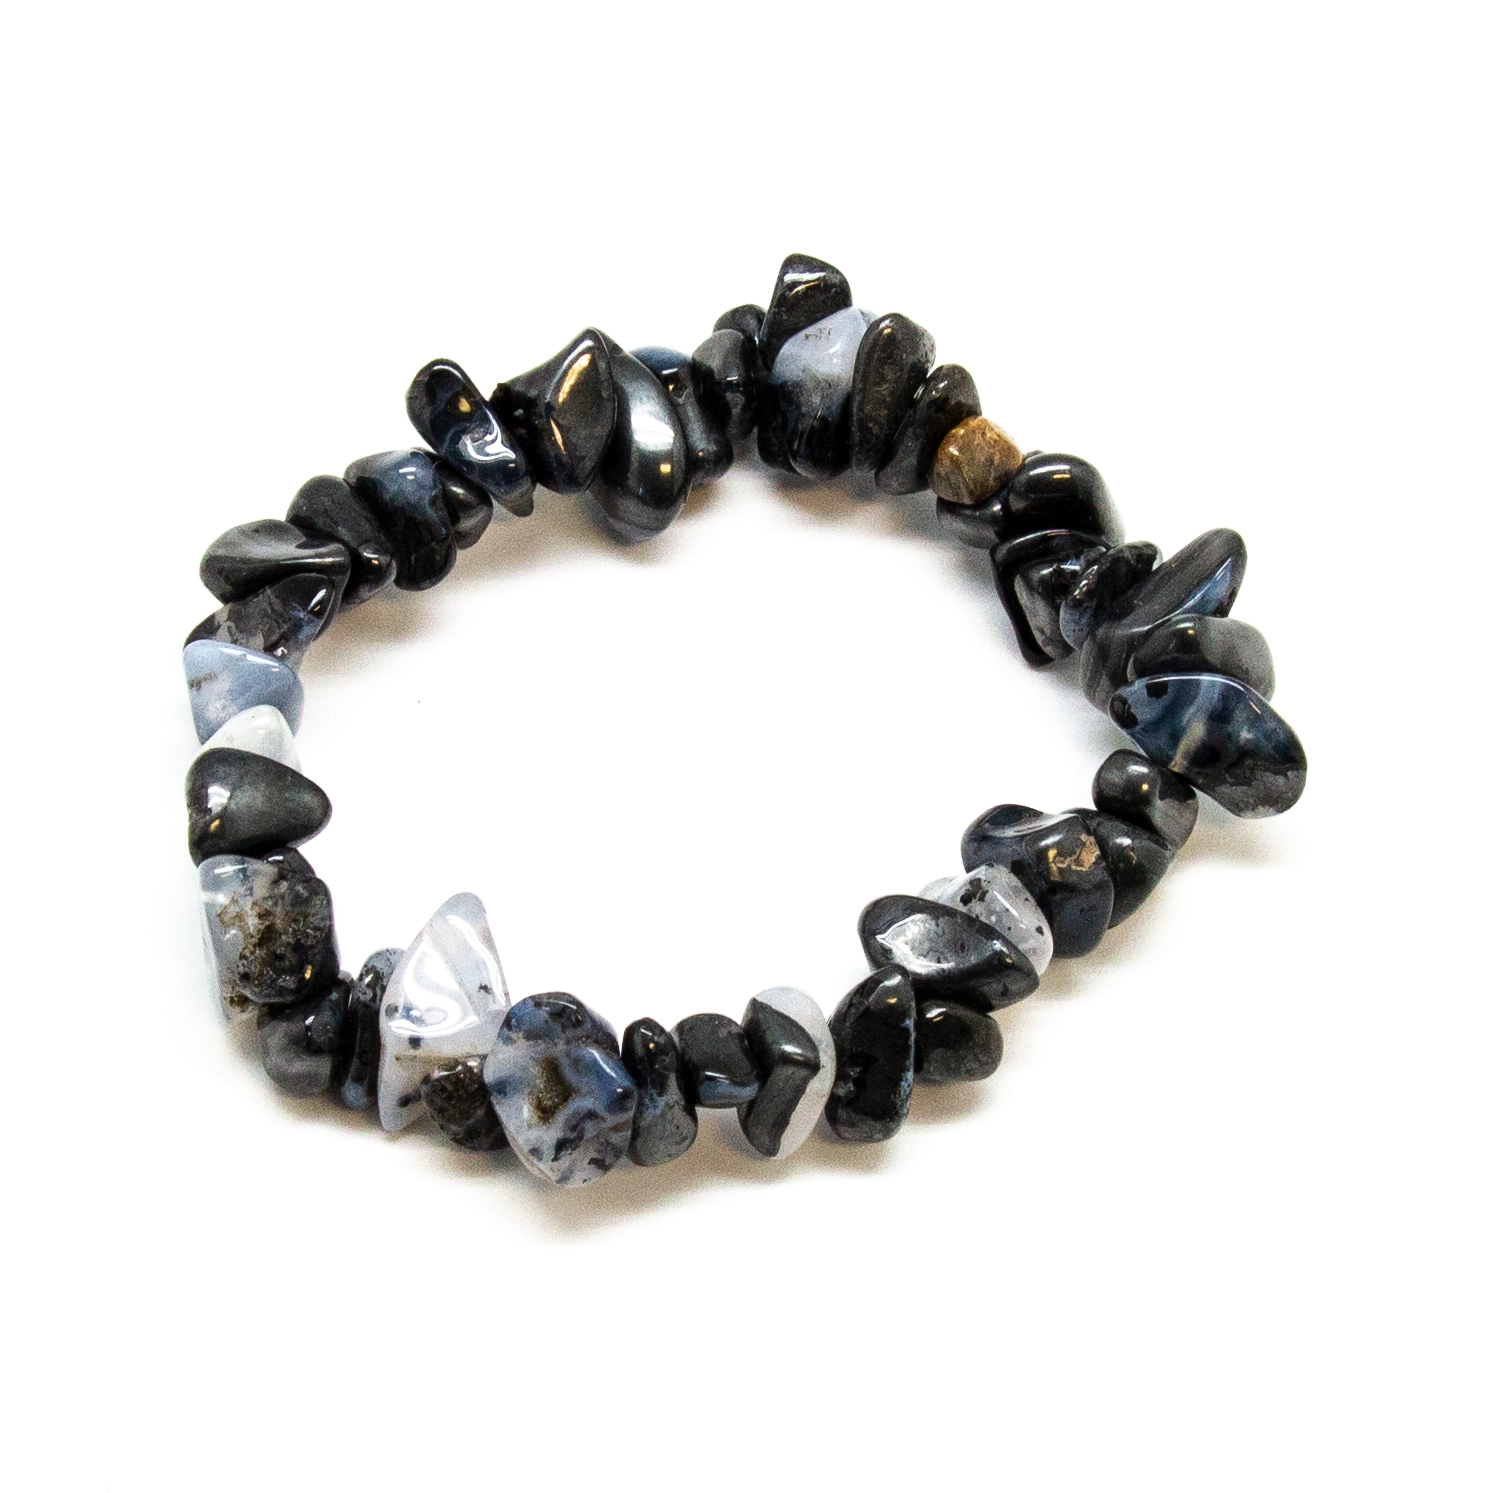 Indigo Gabbro Mystic Merlinite Bracelet Natural Stones Crystal Beads Evolution